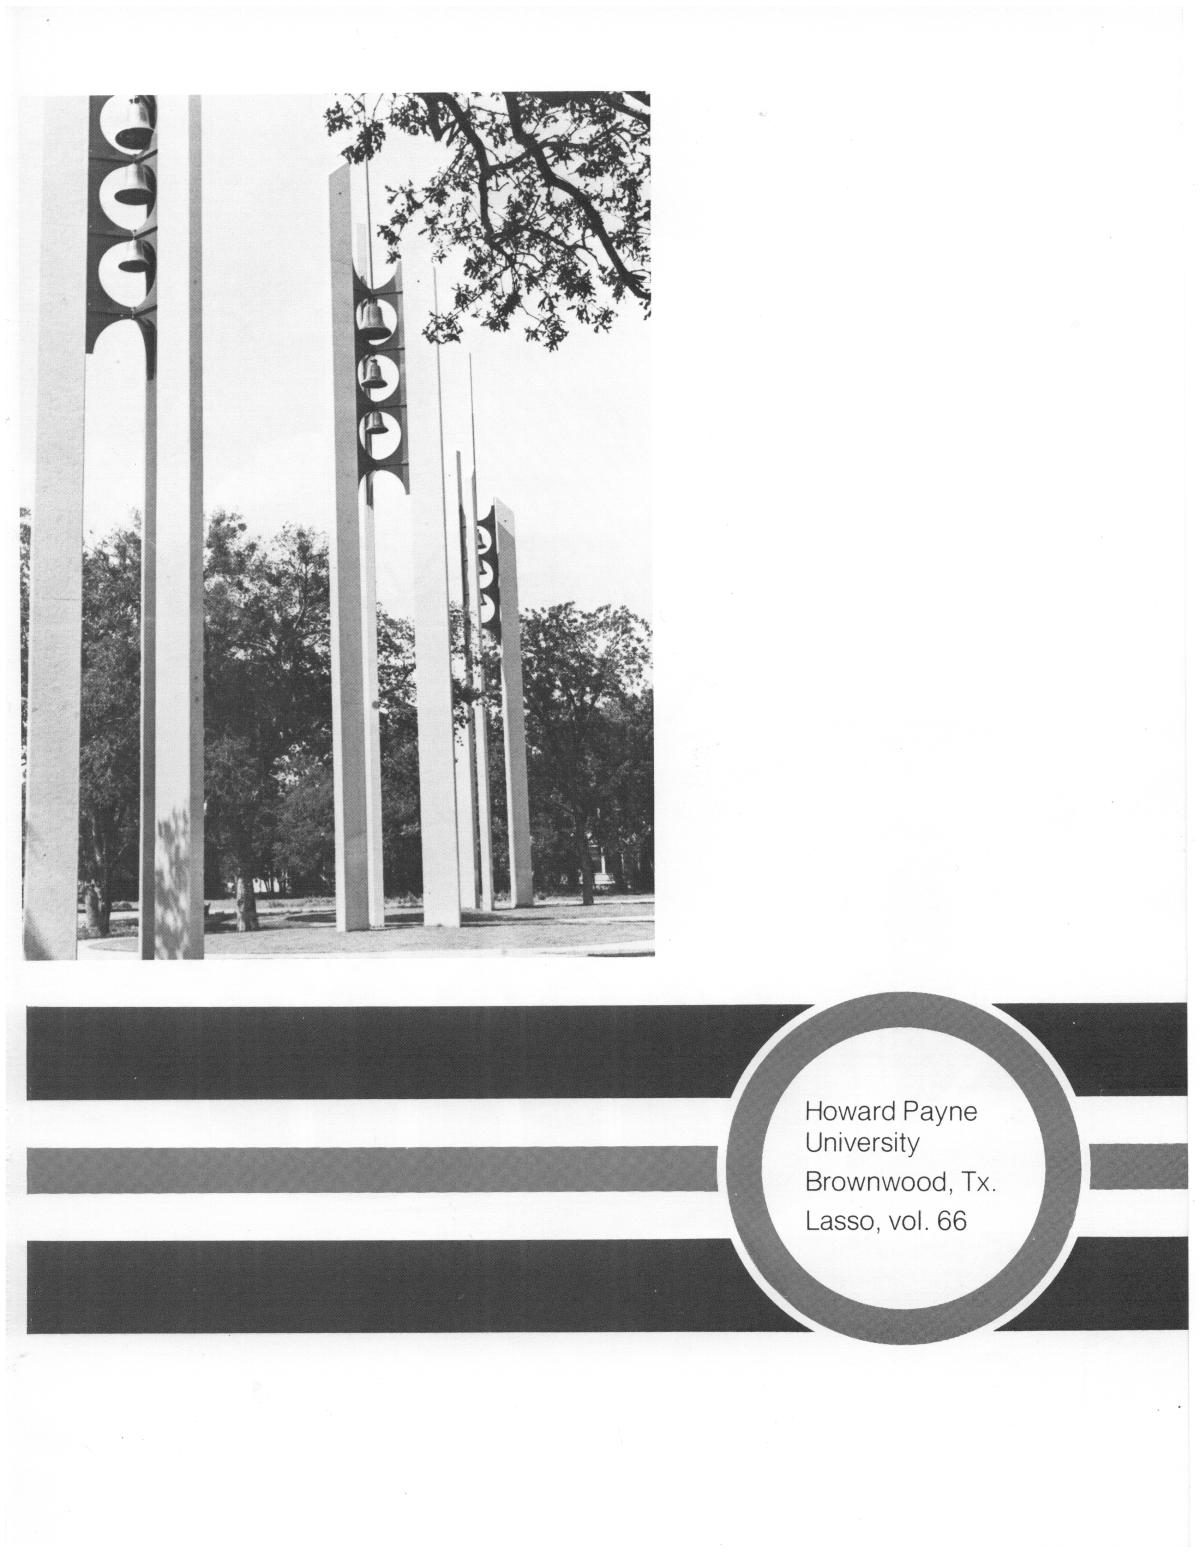 The Lasso, Yearbook of Howard Payne University, 1979
                                                
                                                    1
                                                